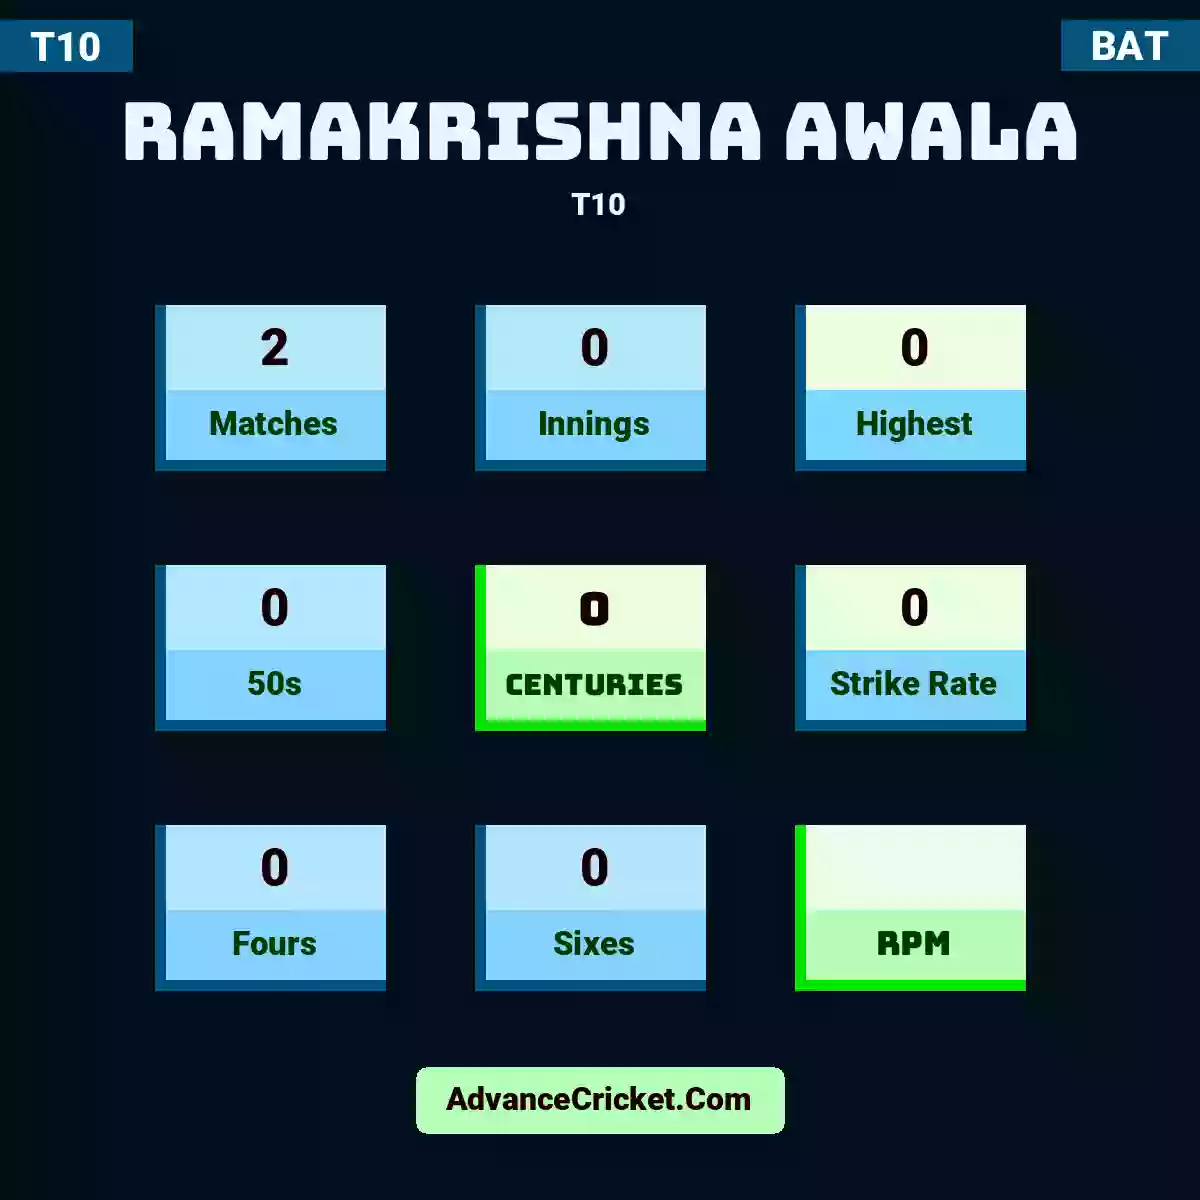 Ramakrishna Awala T10 , Ramakrishna Awala played 2 matches, scored 0 runs as highest, 0 half-centuries, and 0 centuries, with a strike rate of 0. R.Awala hit 0 fours and 0 sixes.